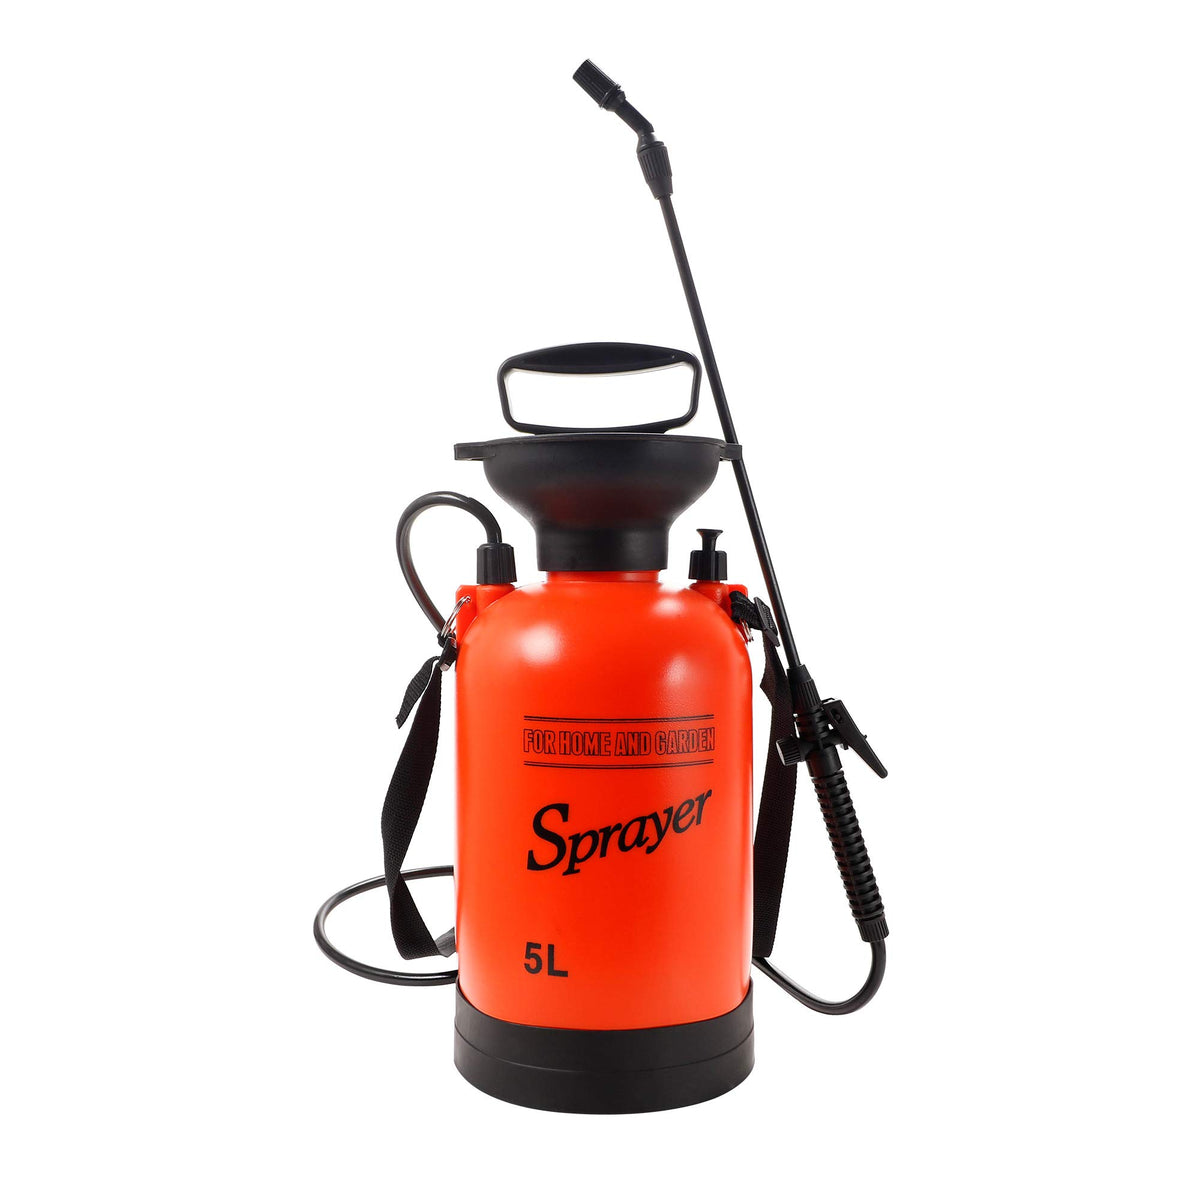 Pump Sprayer in Lawn and Garden 1.3-Gallon Portable Pressure Sprayers for Fertilizer-GARTOL